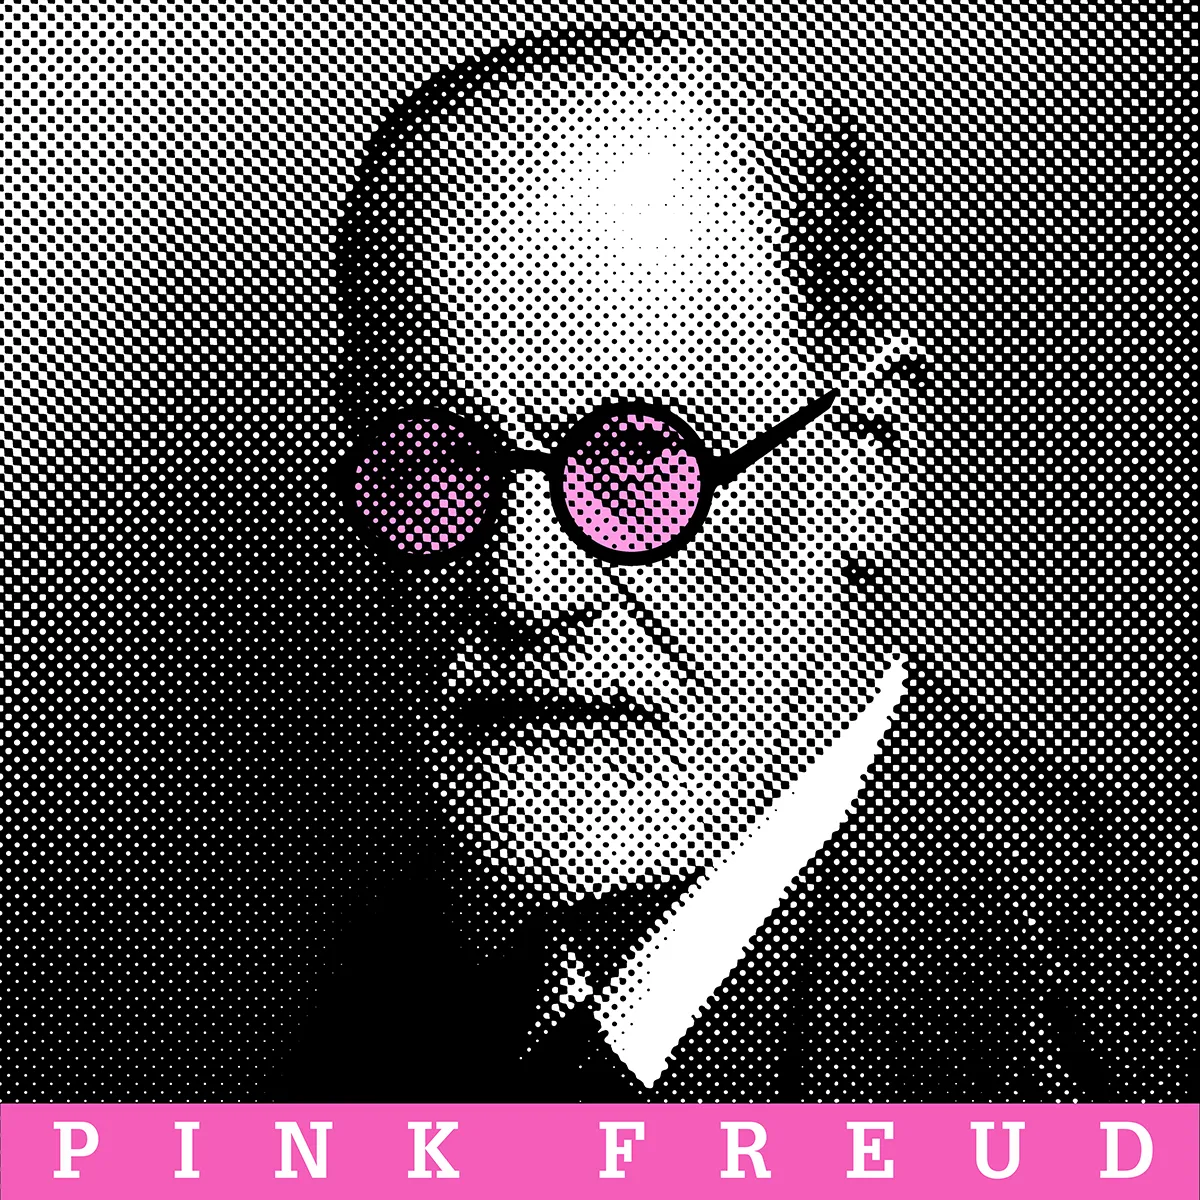 Print from contemporary artist Vladimir Tsesler - Pink Freud. For sale.